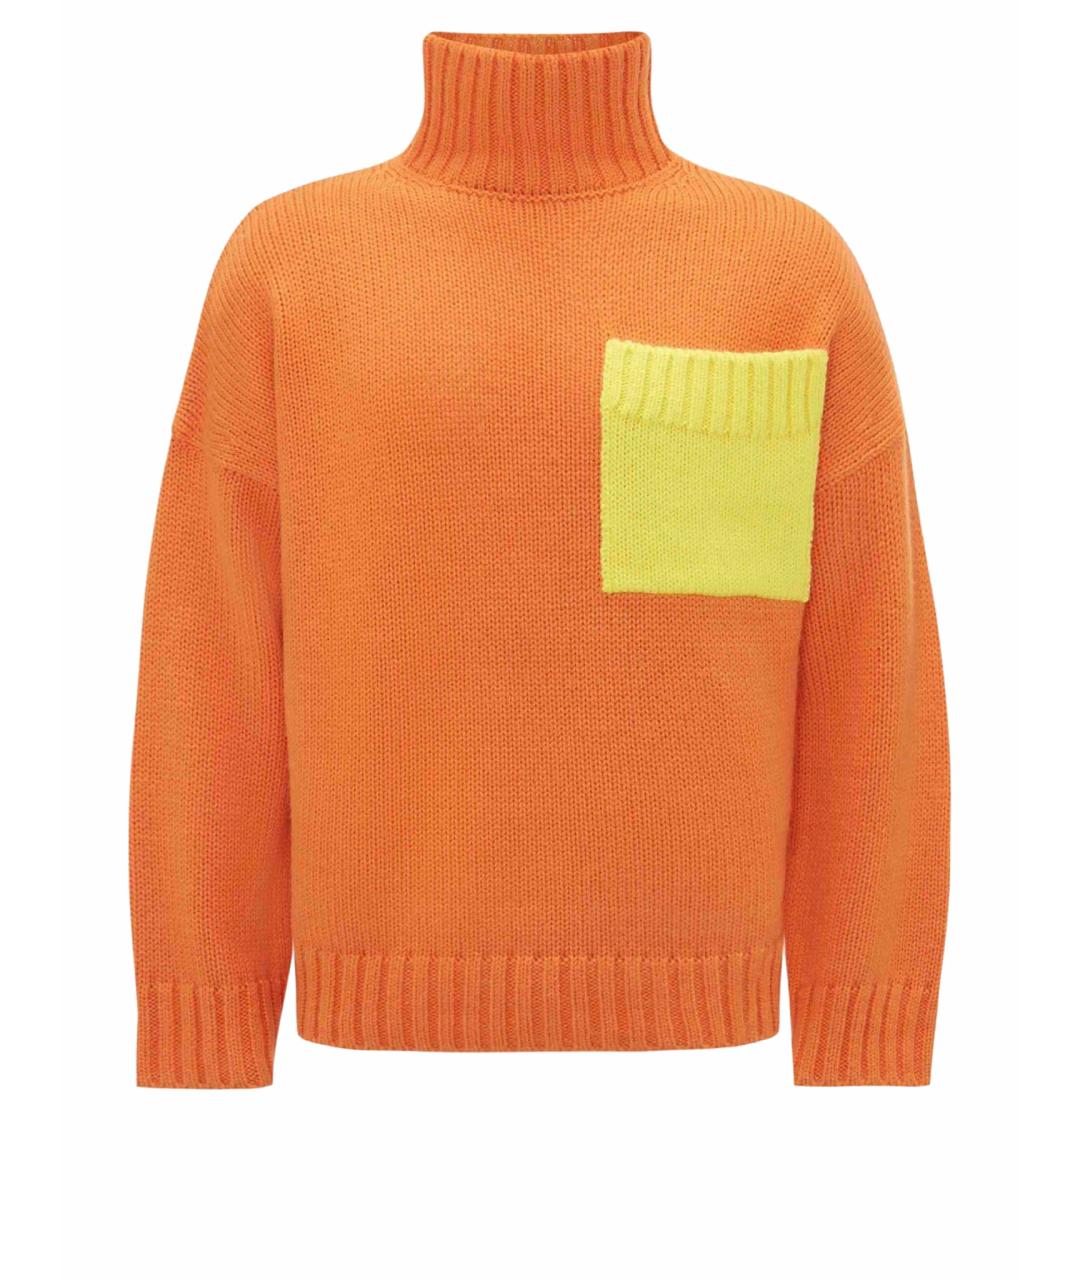 J.W.ANDERSON Оранжевый джемпер / свитер, фото 1